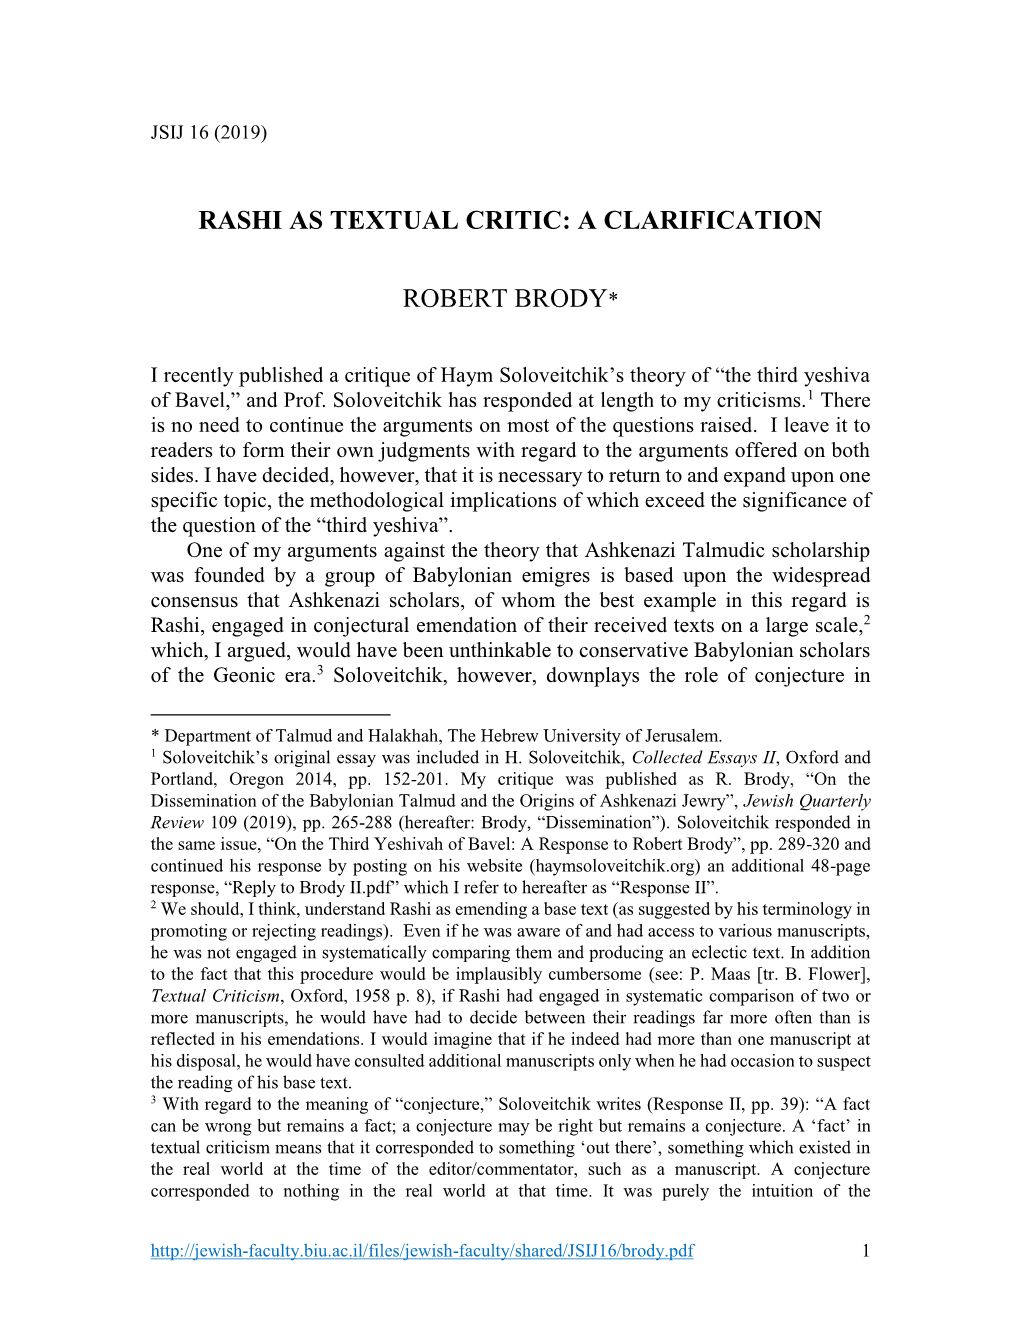 Rashi As Textual Critic: a Clarification Robert Brody*